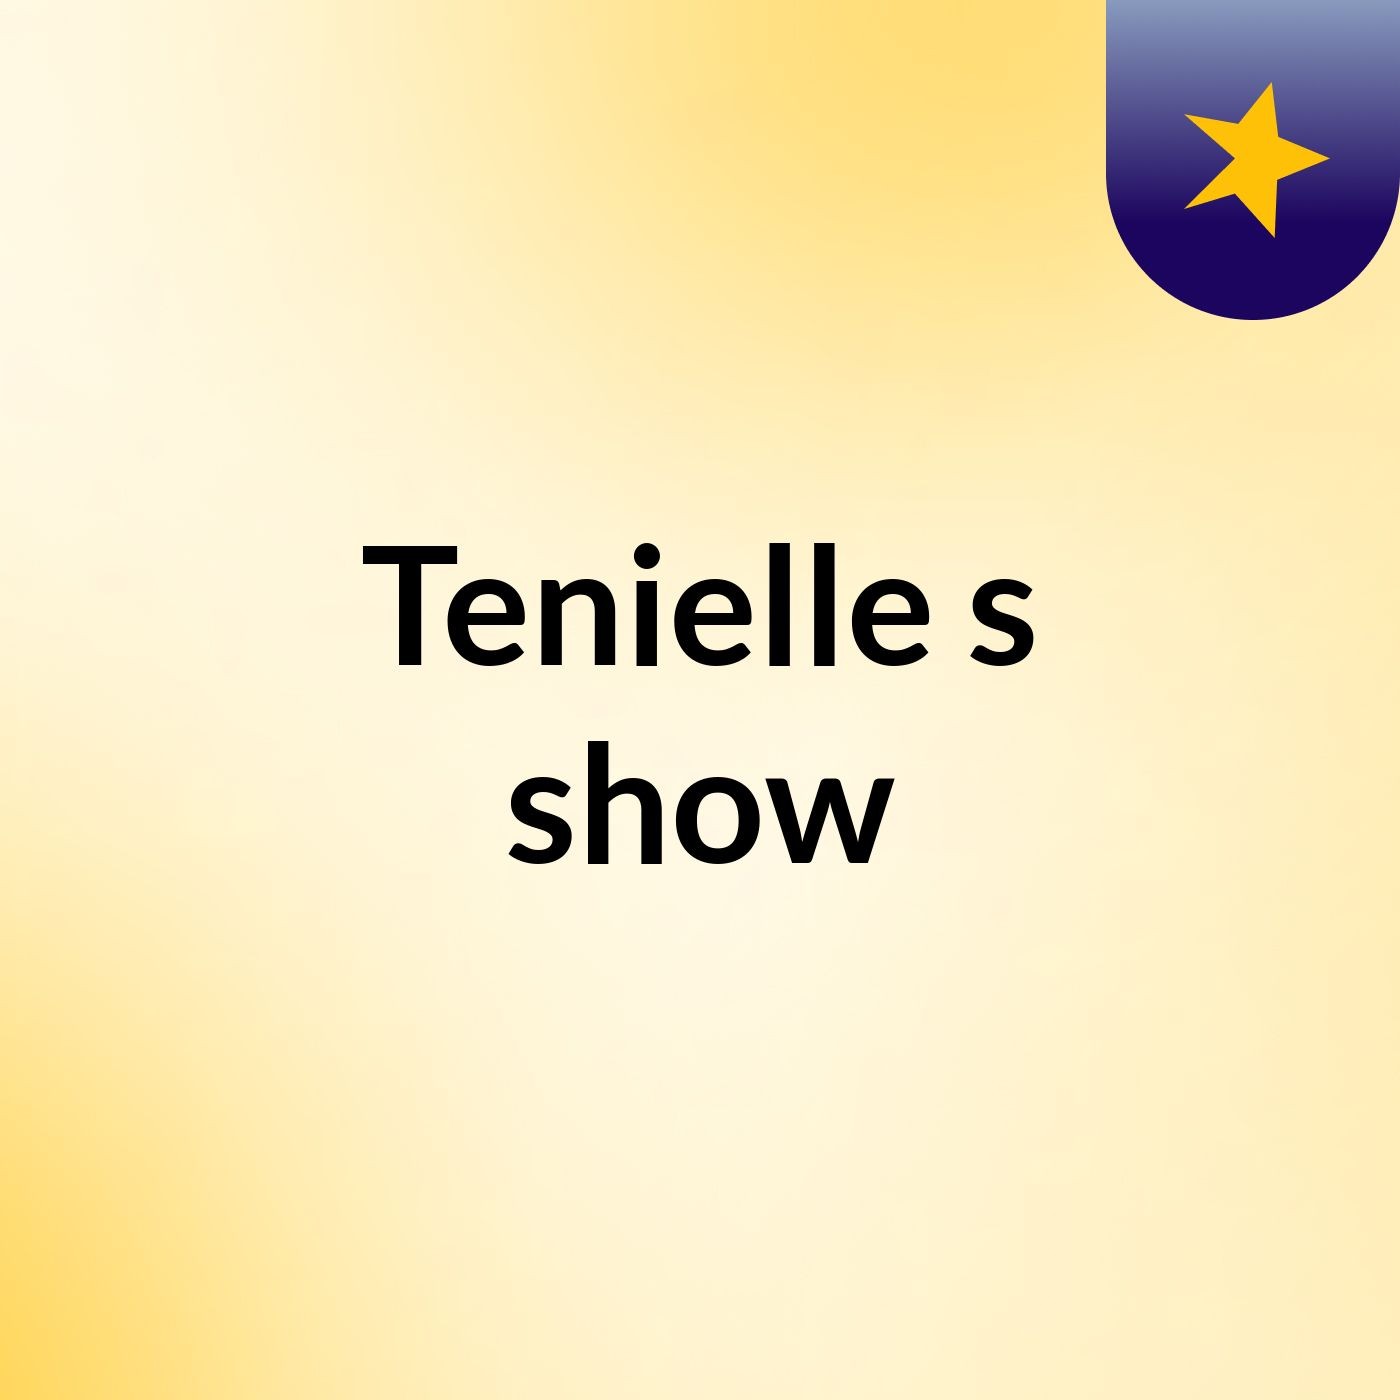 Tenielle's show